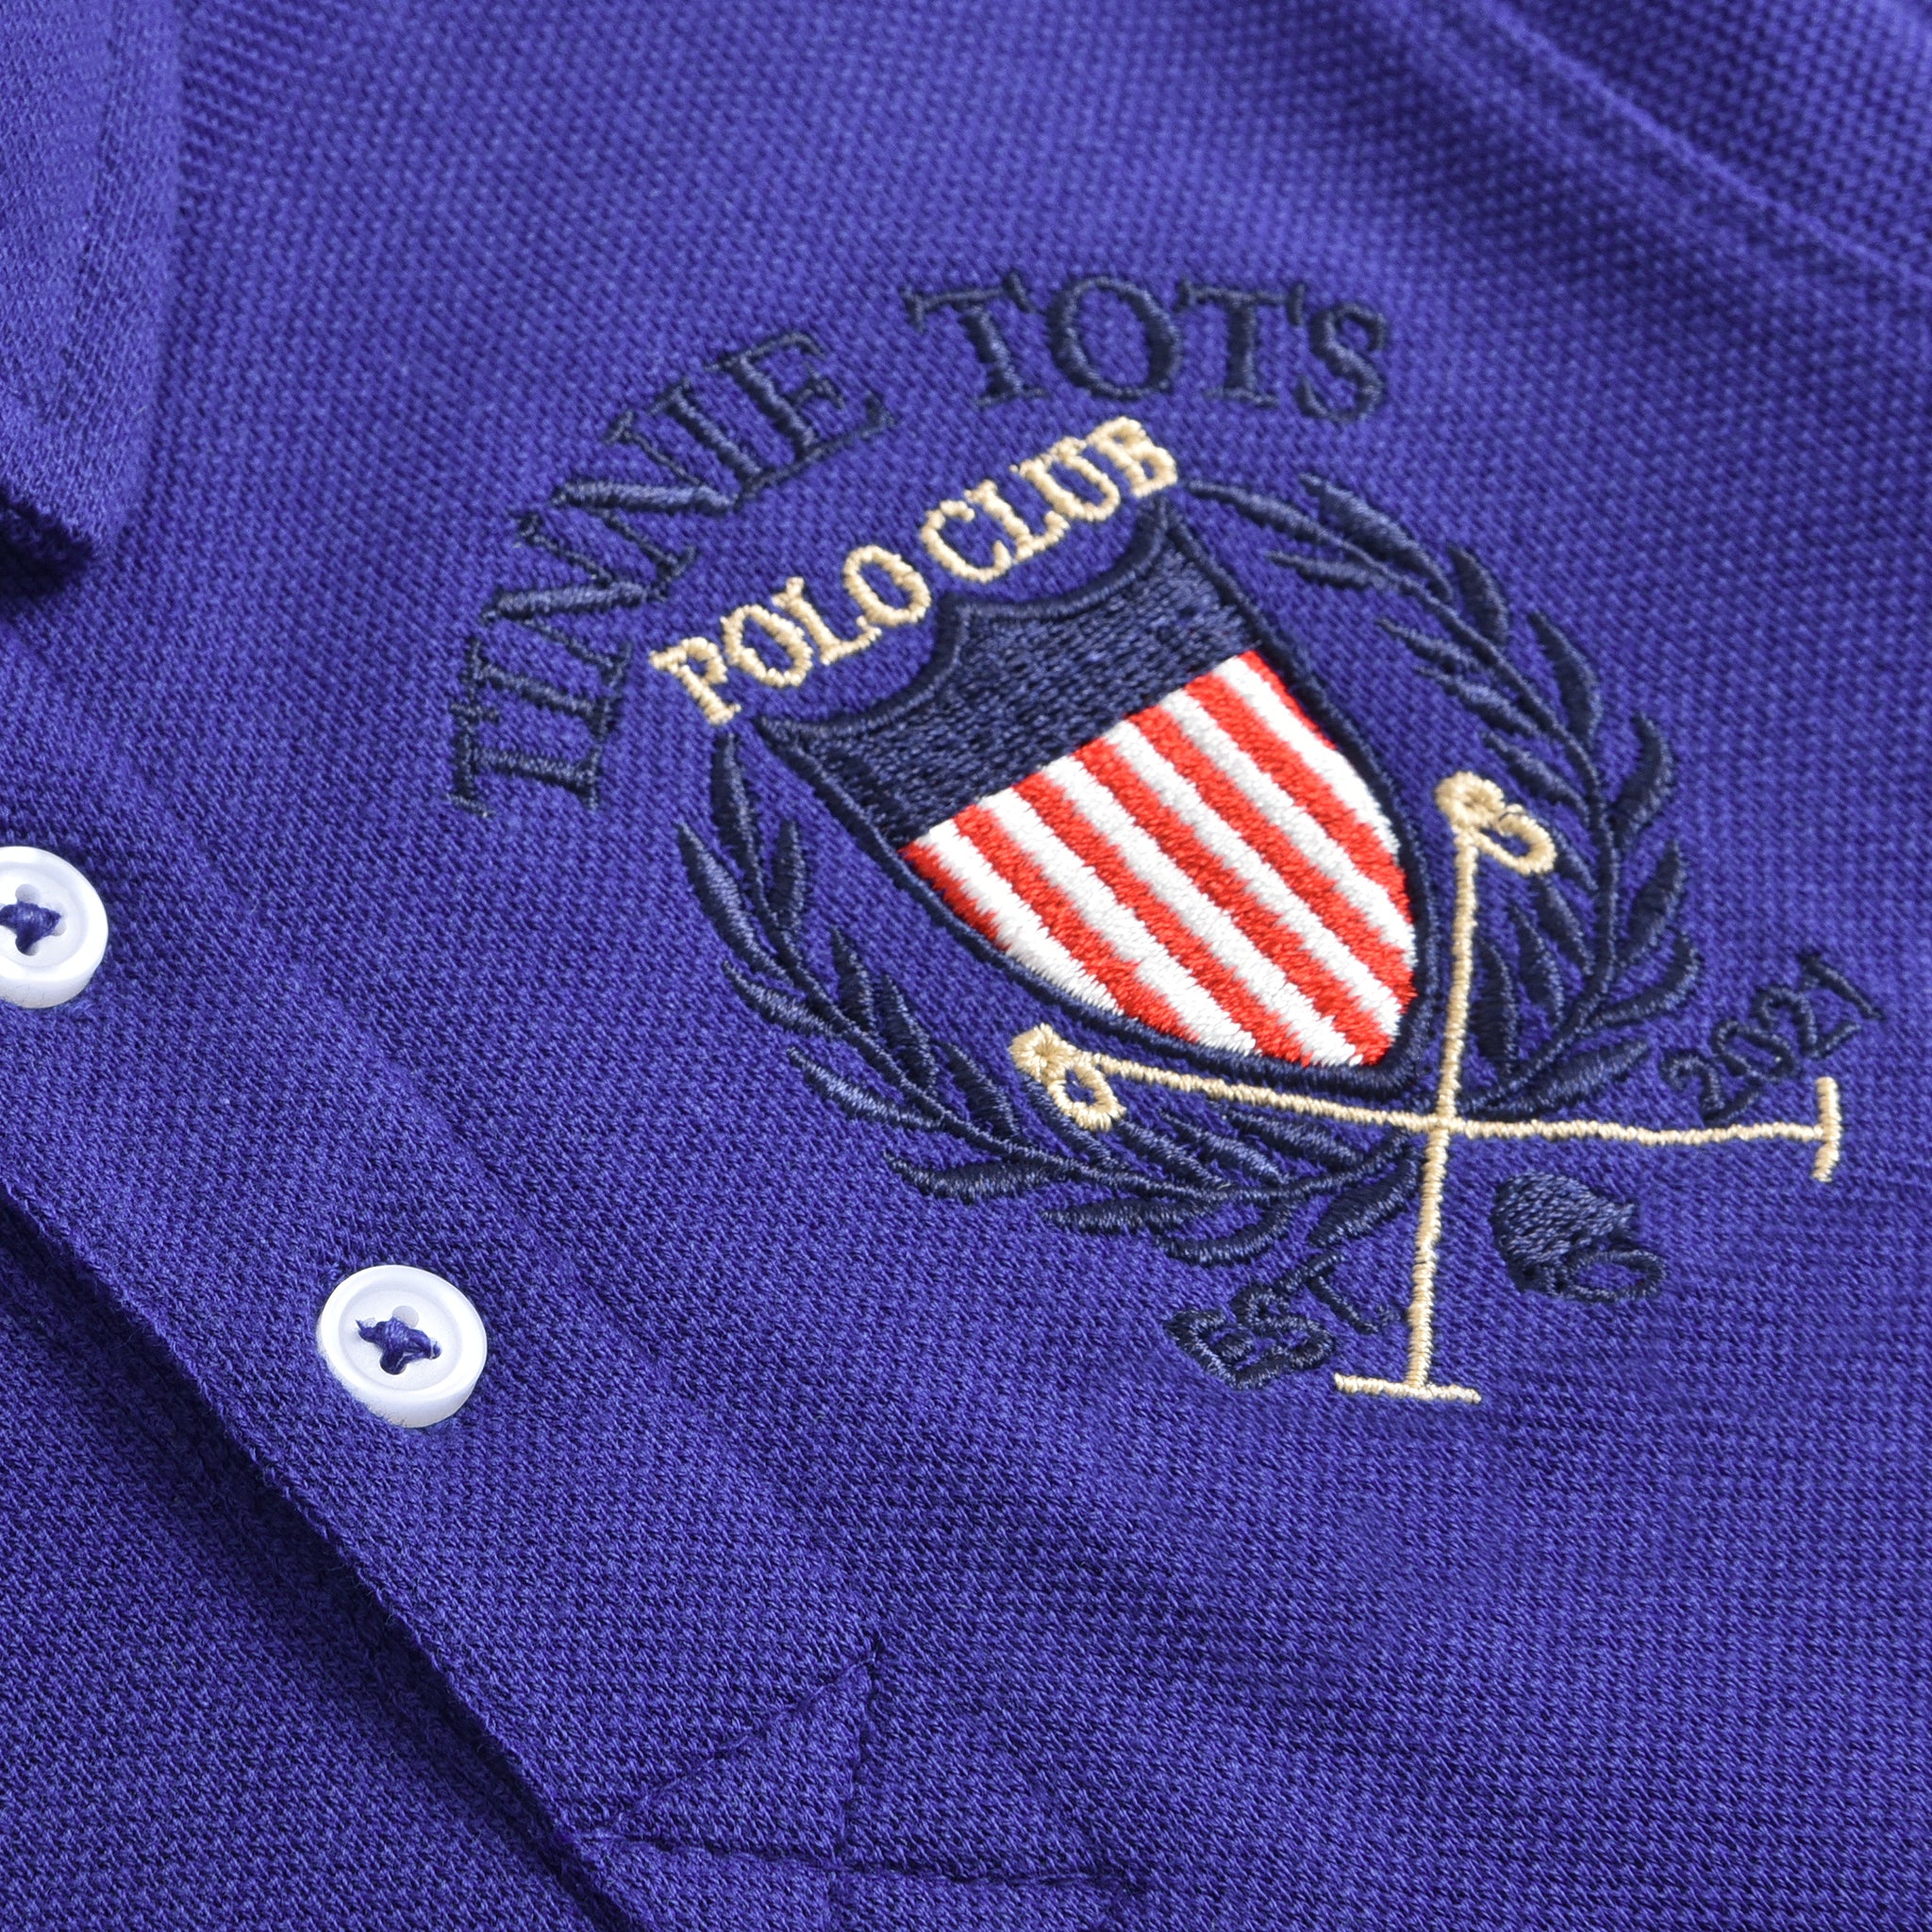 Royal Blue Polo Shirt